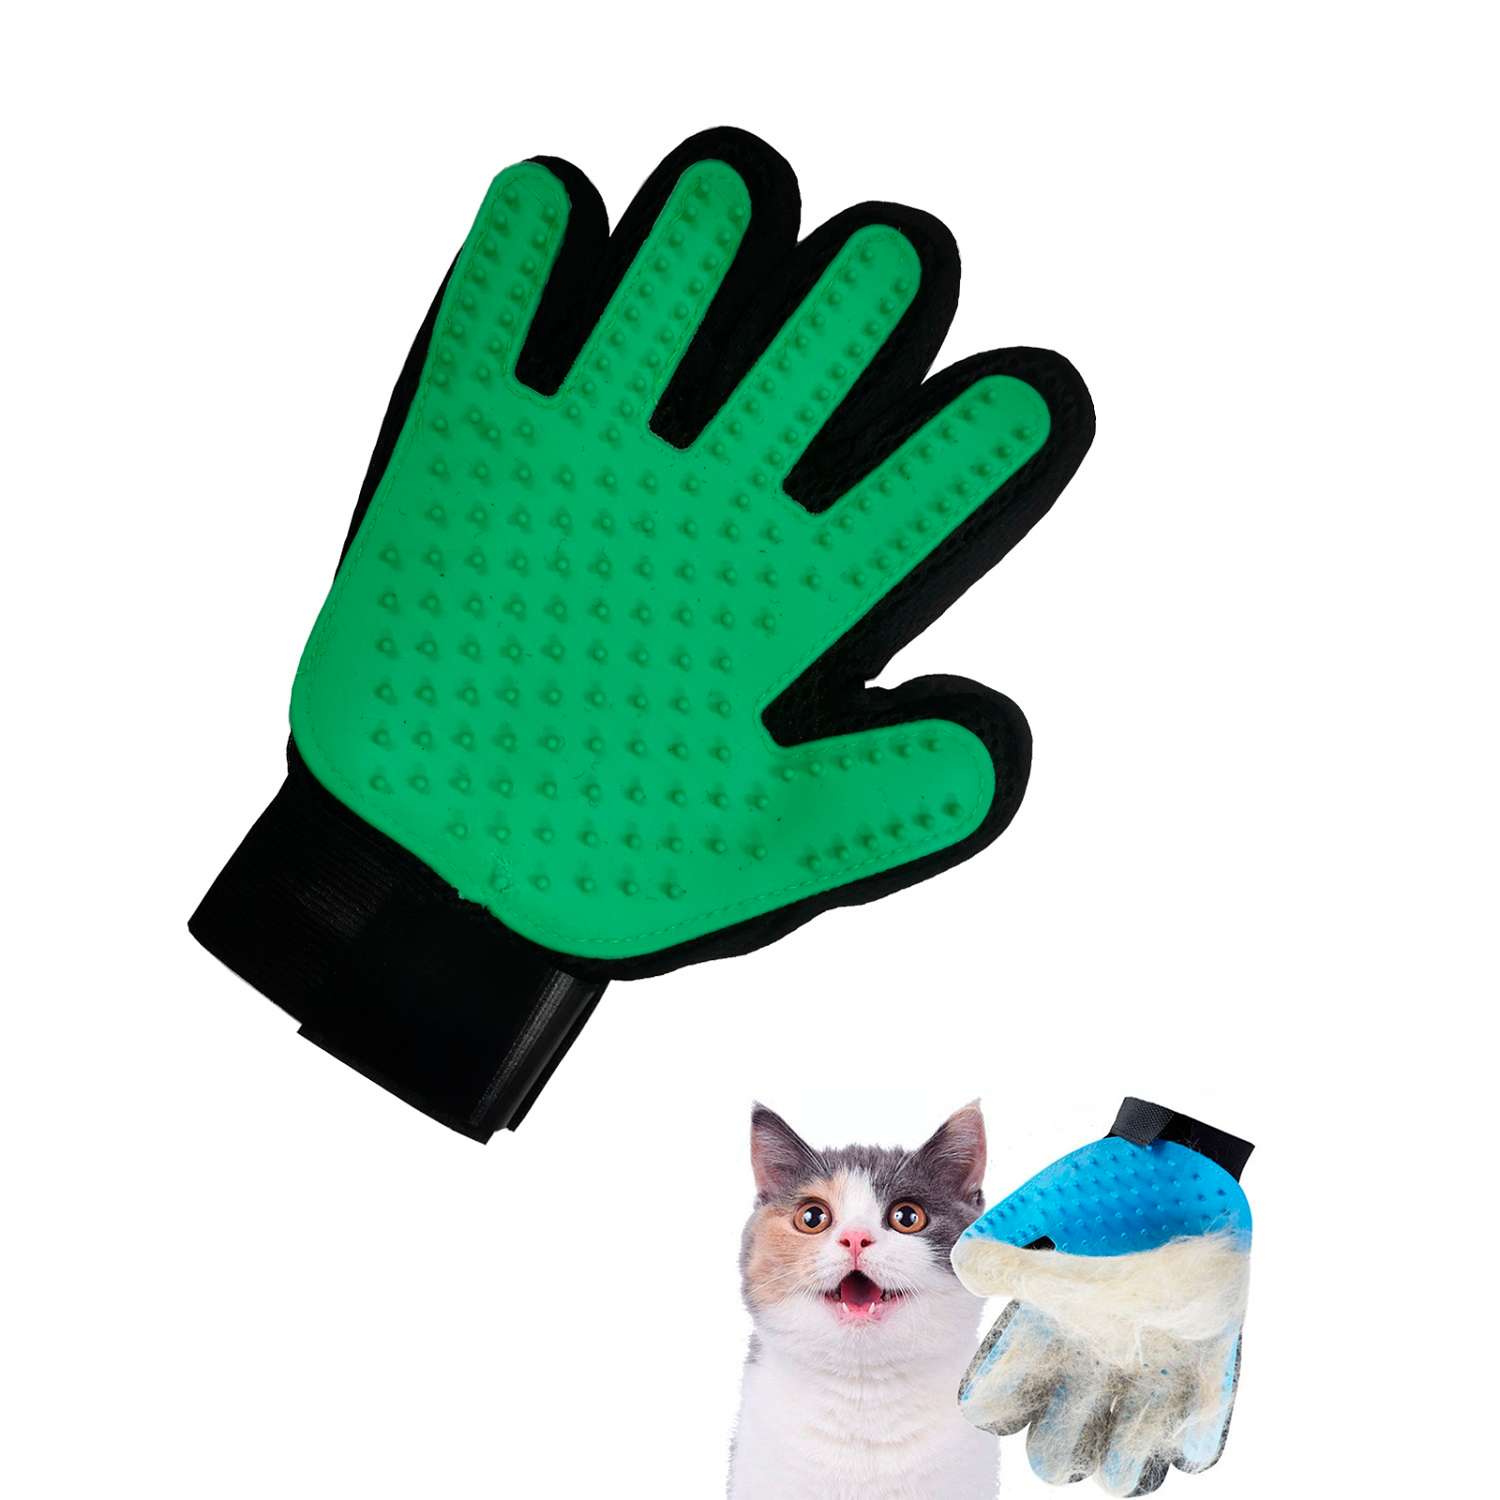 Перчатка для груминга Stefan массажная для вычесывания шерсти животных зеленая 23х17см - фото 2